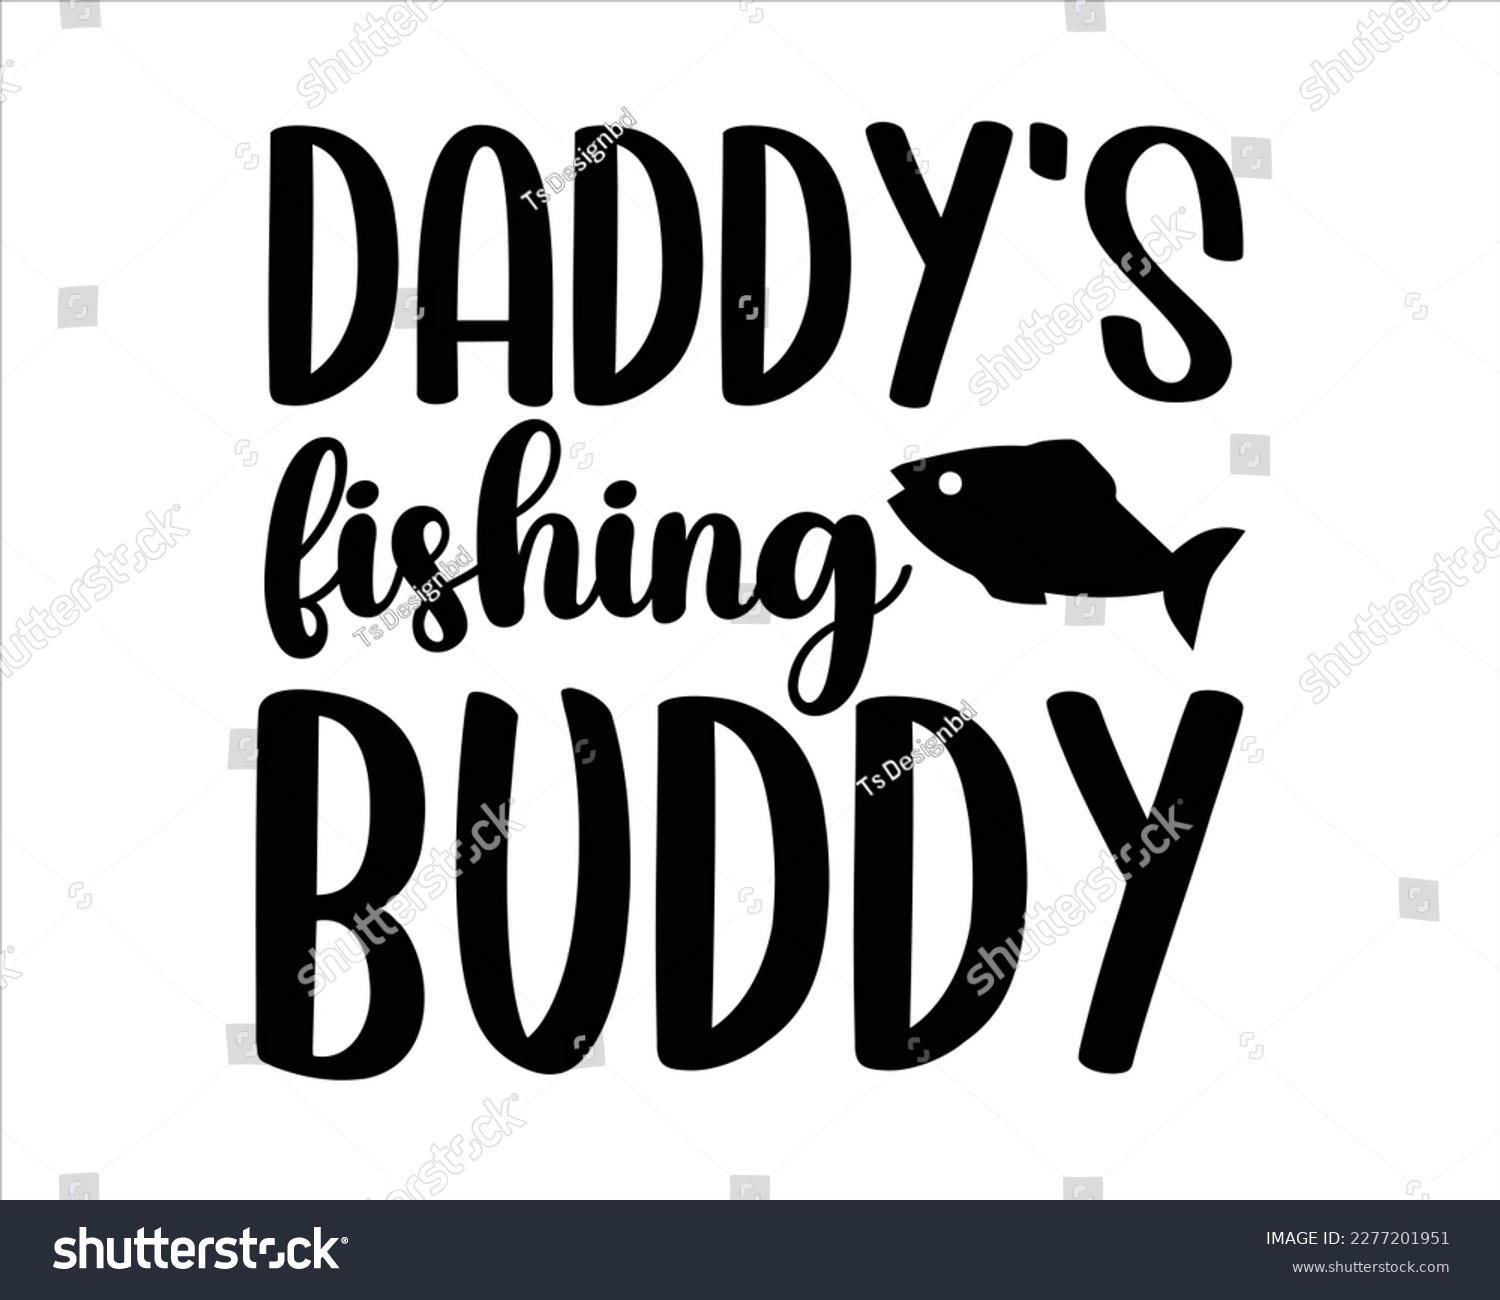 SVG of Daddy's Fishing Buddy Svg Design,Fishing Quote Svg,Fishing Silhouette,Fisherman saying eps files,Fishing Quotes SVG Cut Files Designs svg